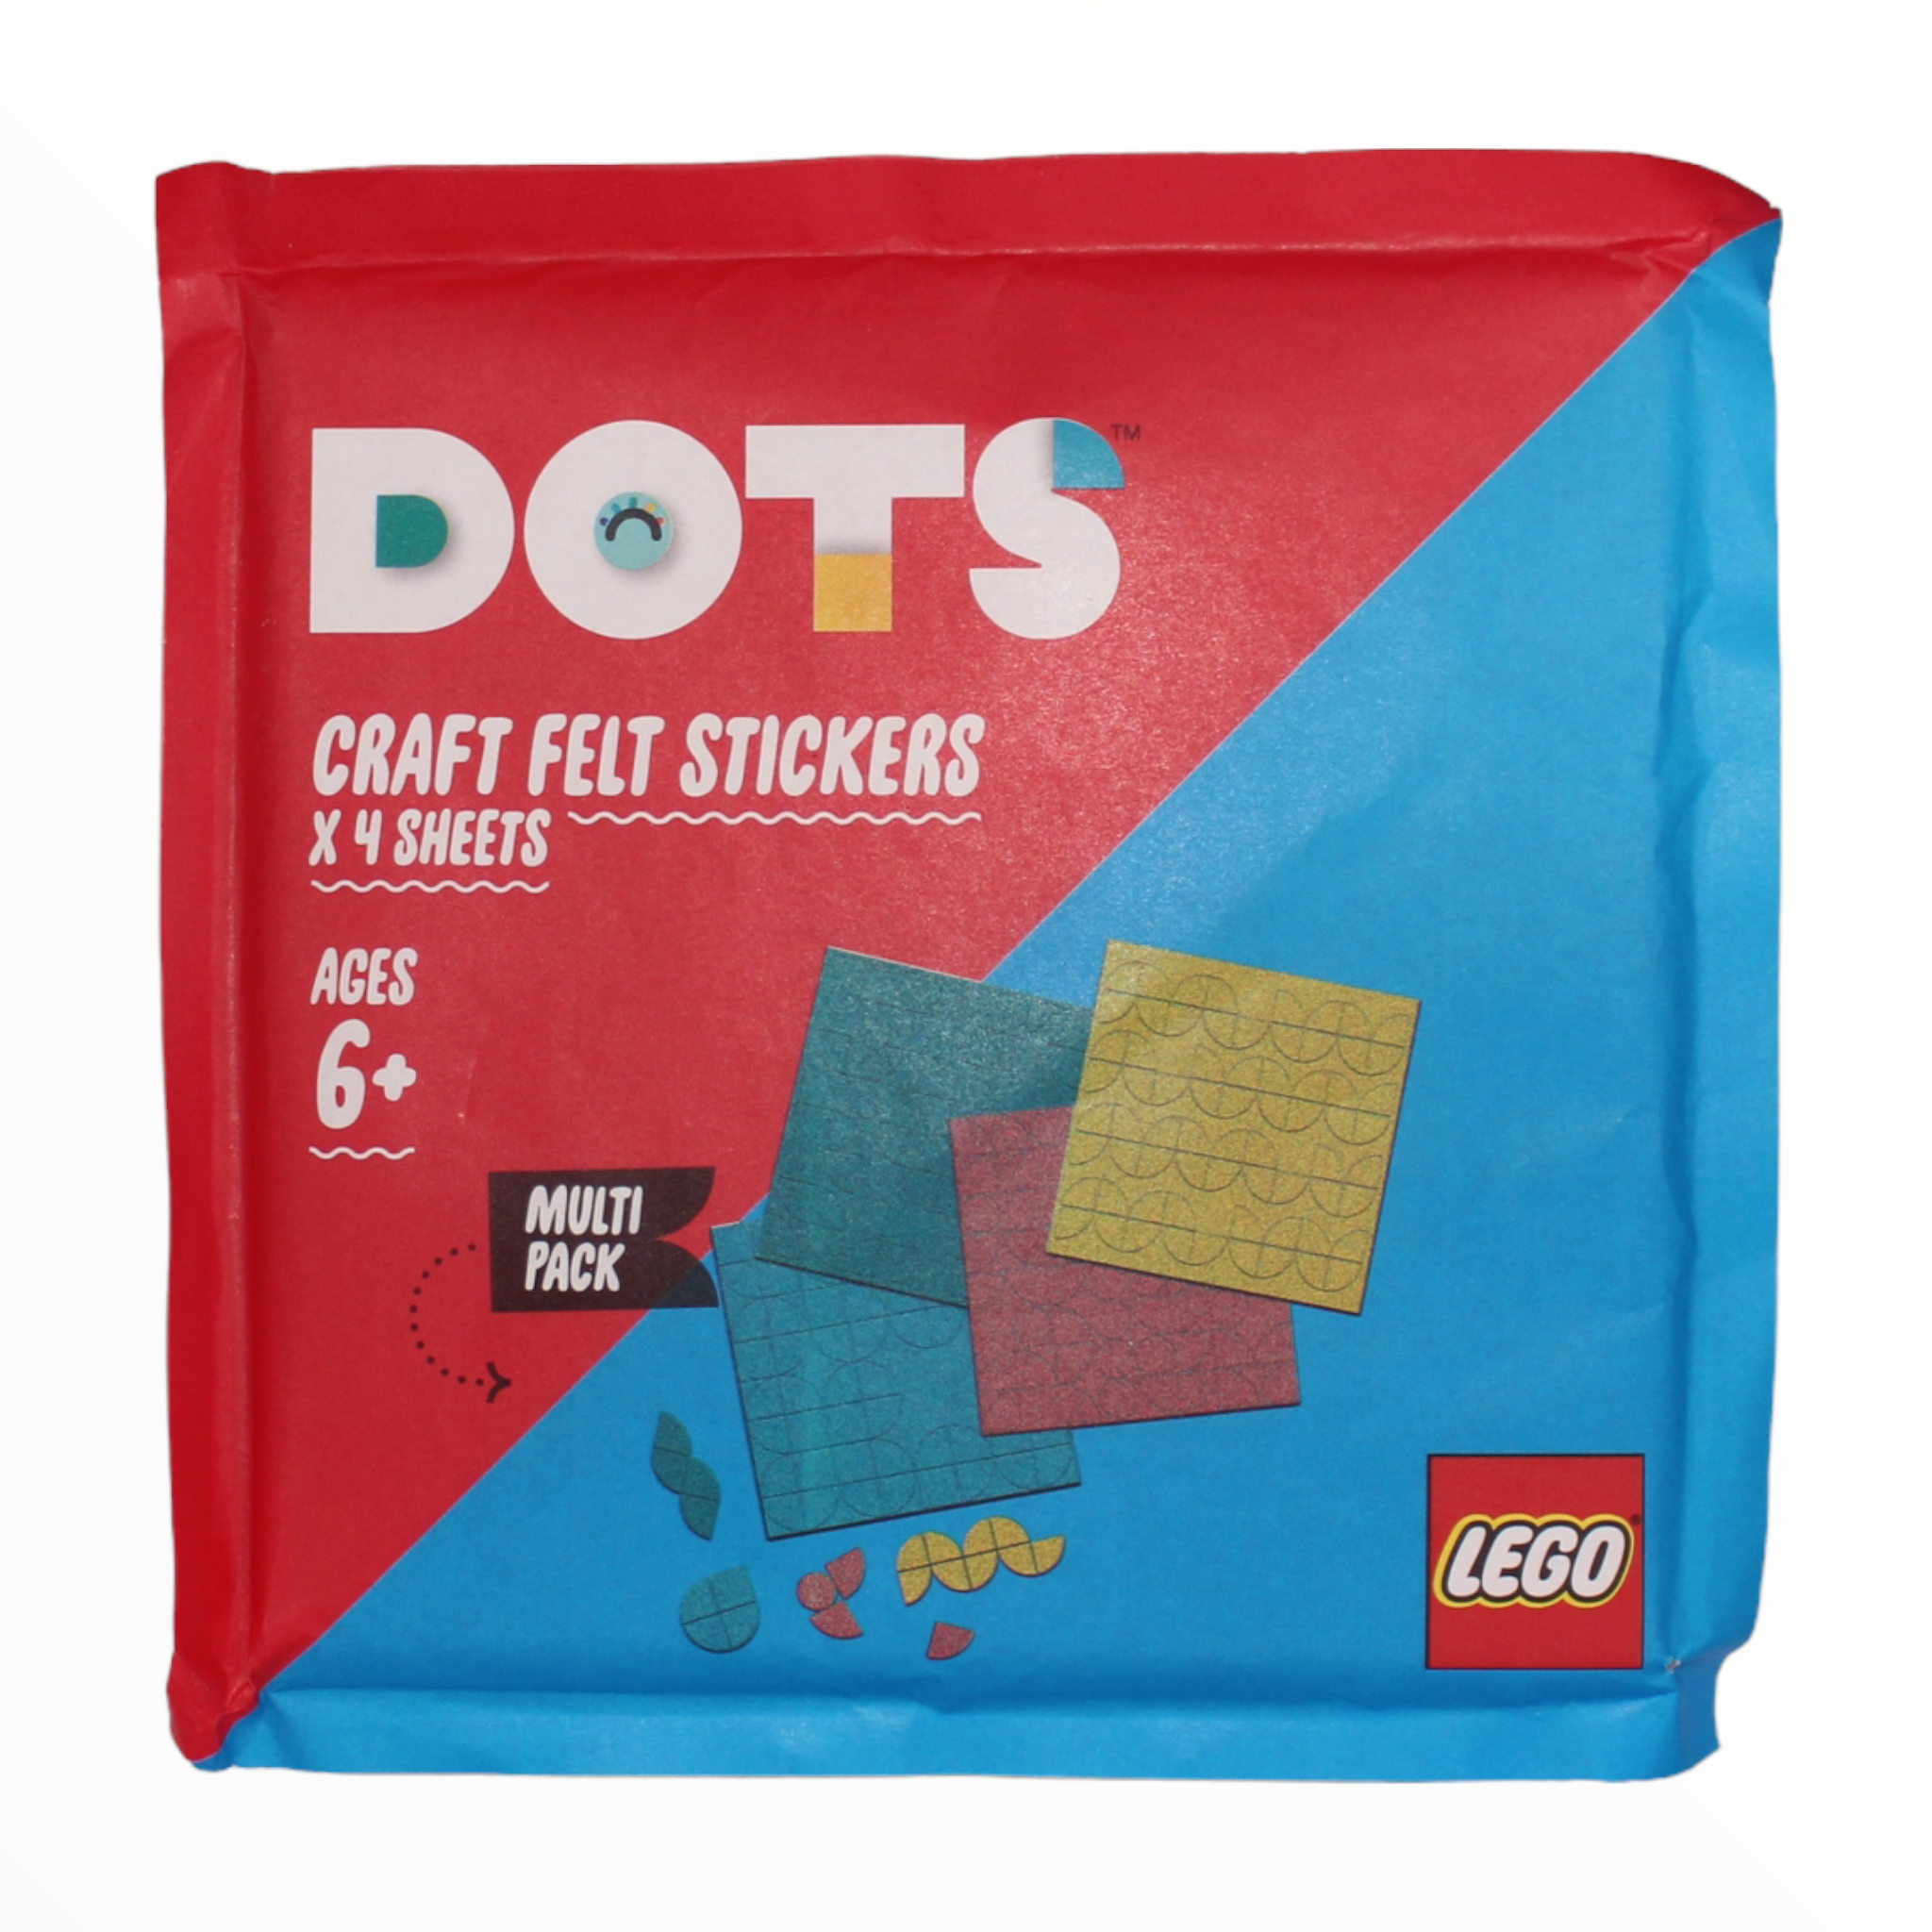 Polybag DOTS Craft Felt Stickers (x4 sheets)